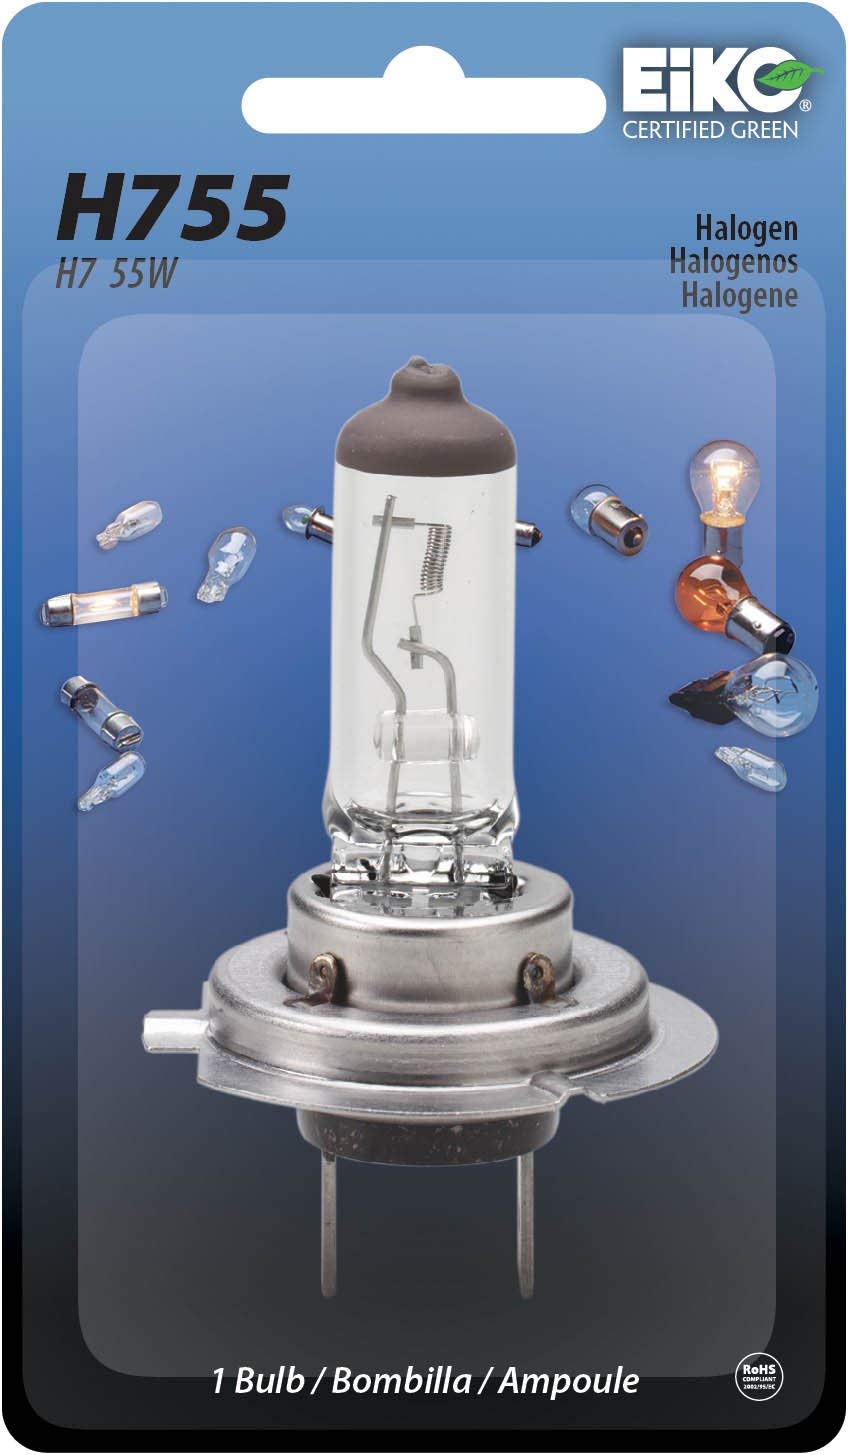 2x Philips 9008 H13 X-tremeVision Upgrade Headlight 100% More Light Bulb  60/55W